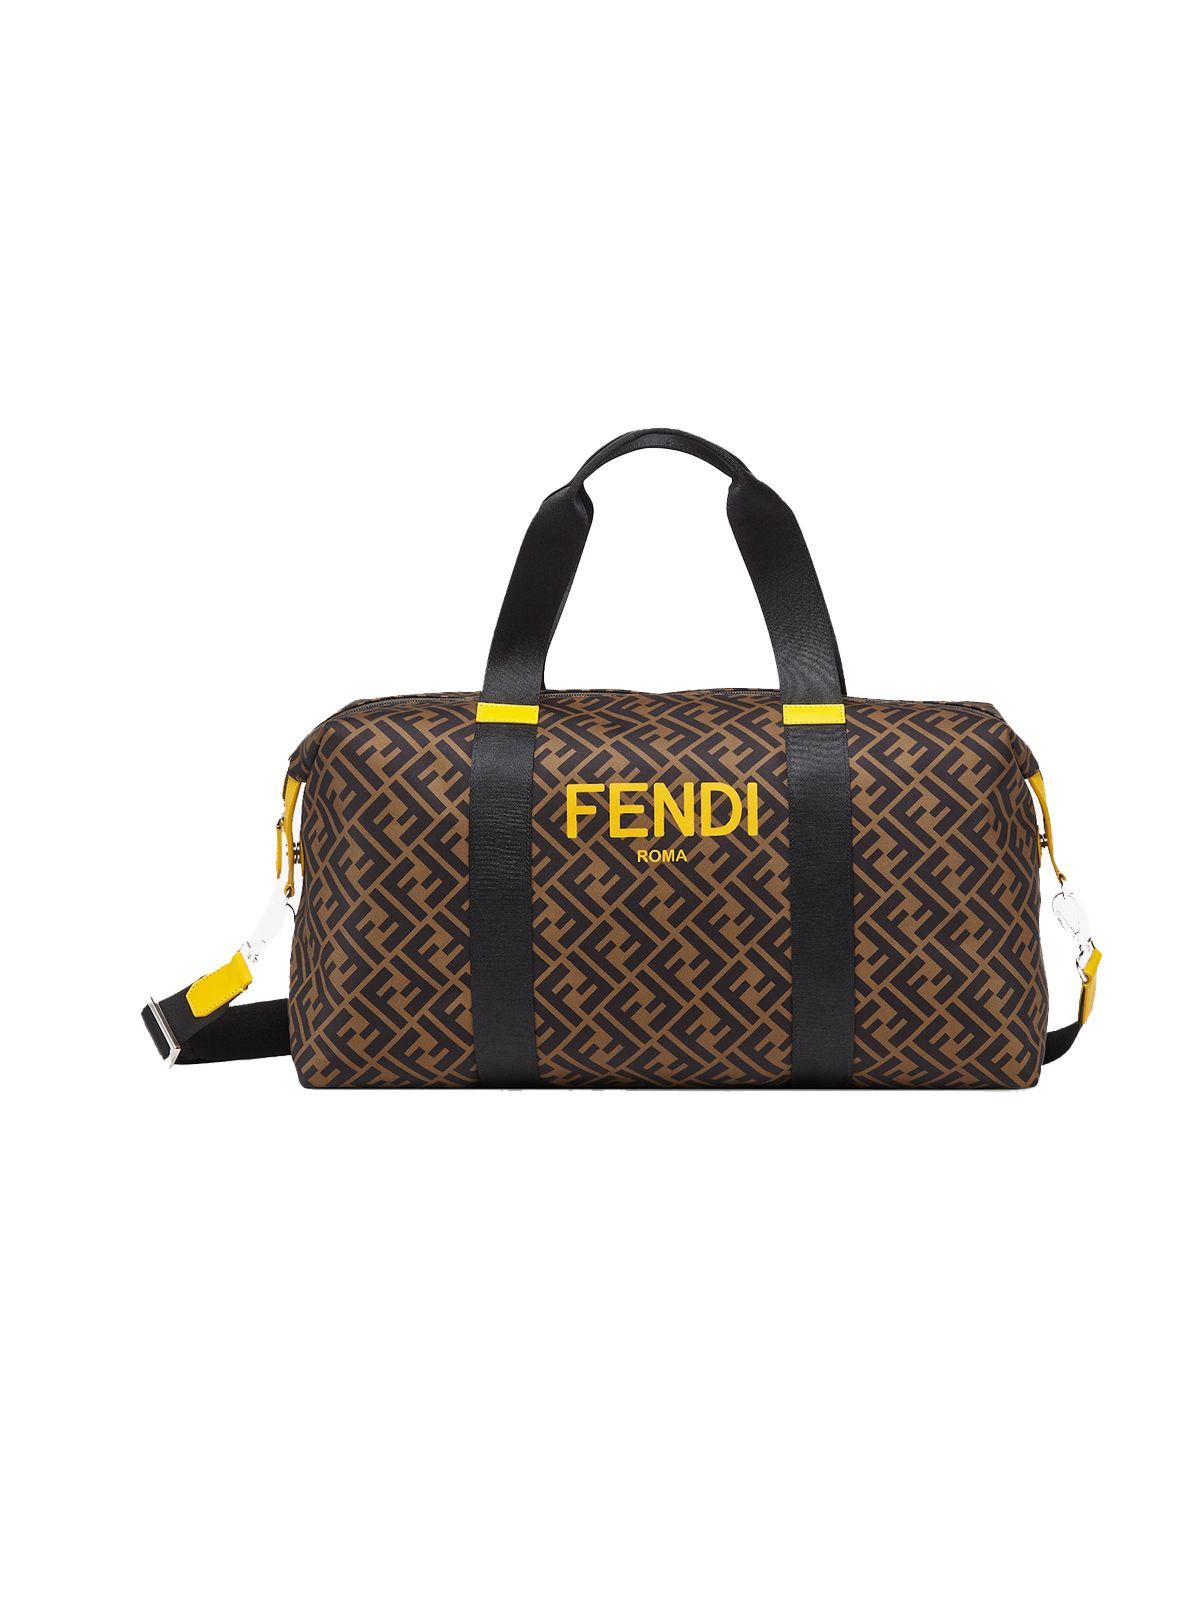 Fendi Roma Ff Motif Travel Bag In Multi